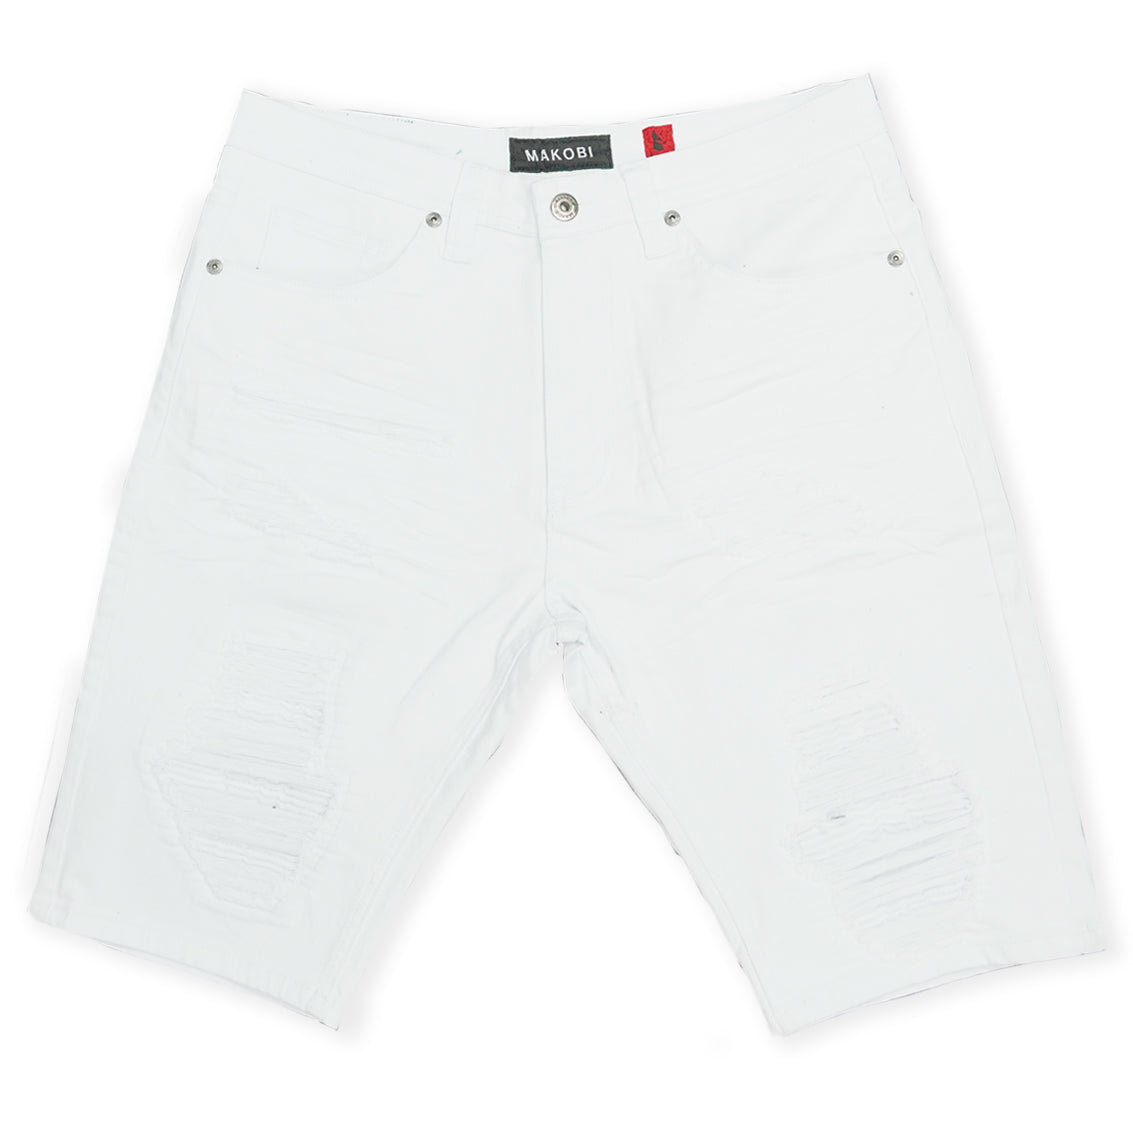 M771 Pacifica Shredded Shorts - White